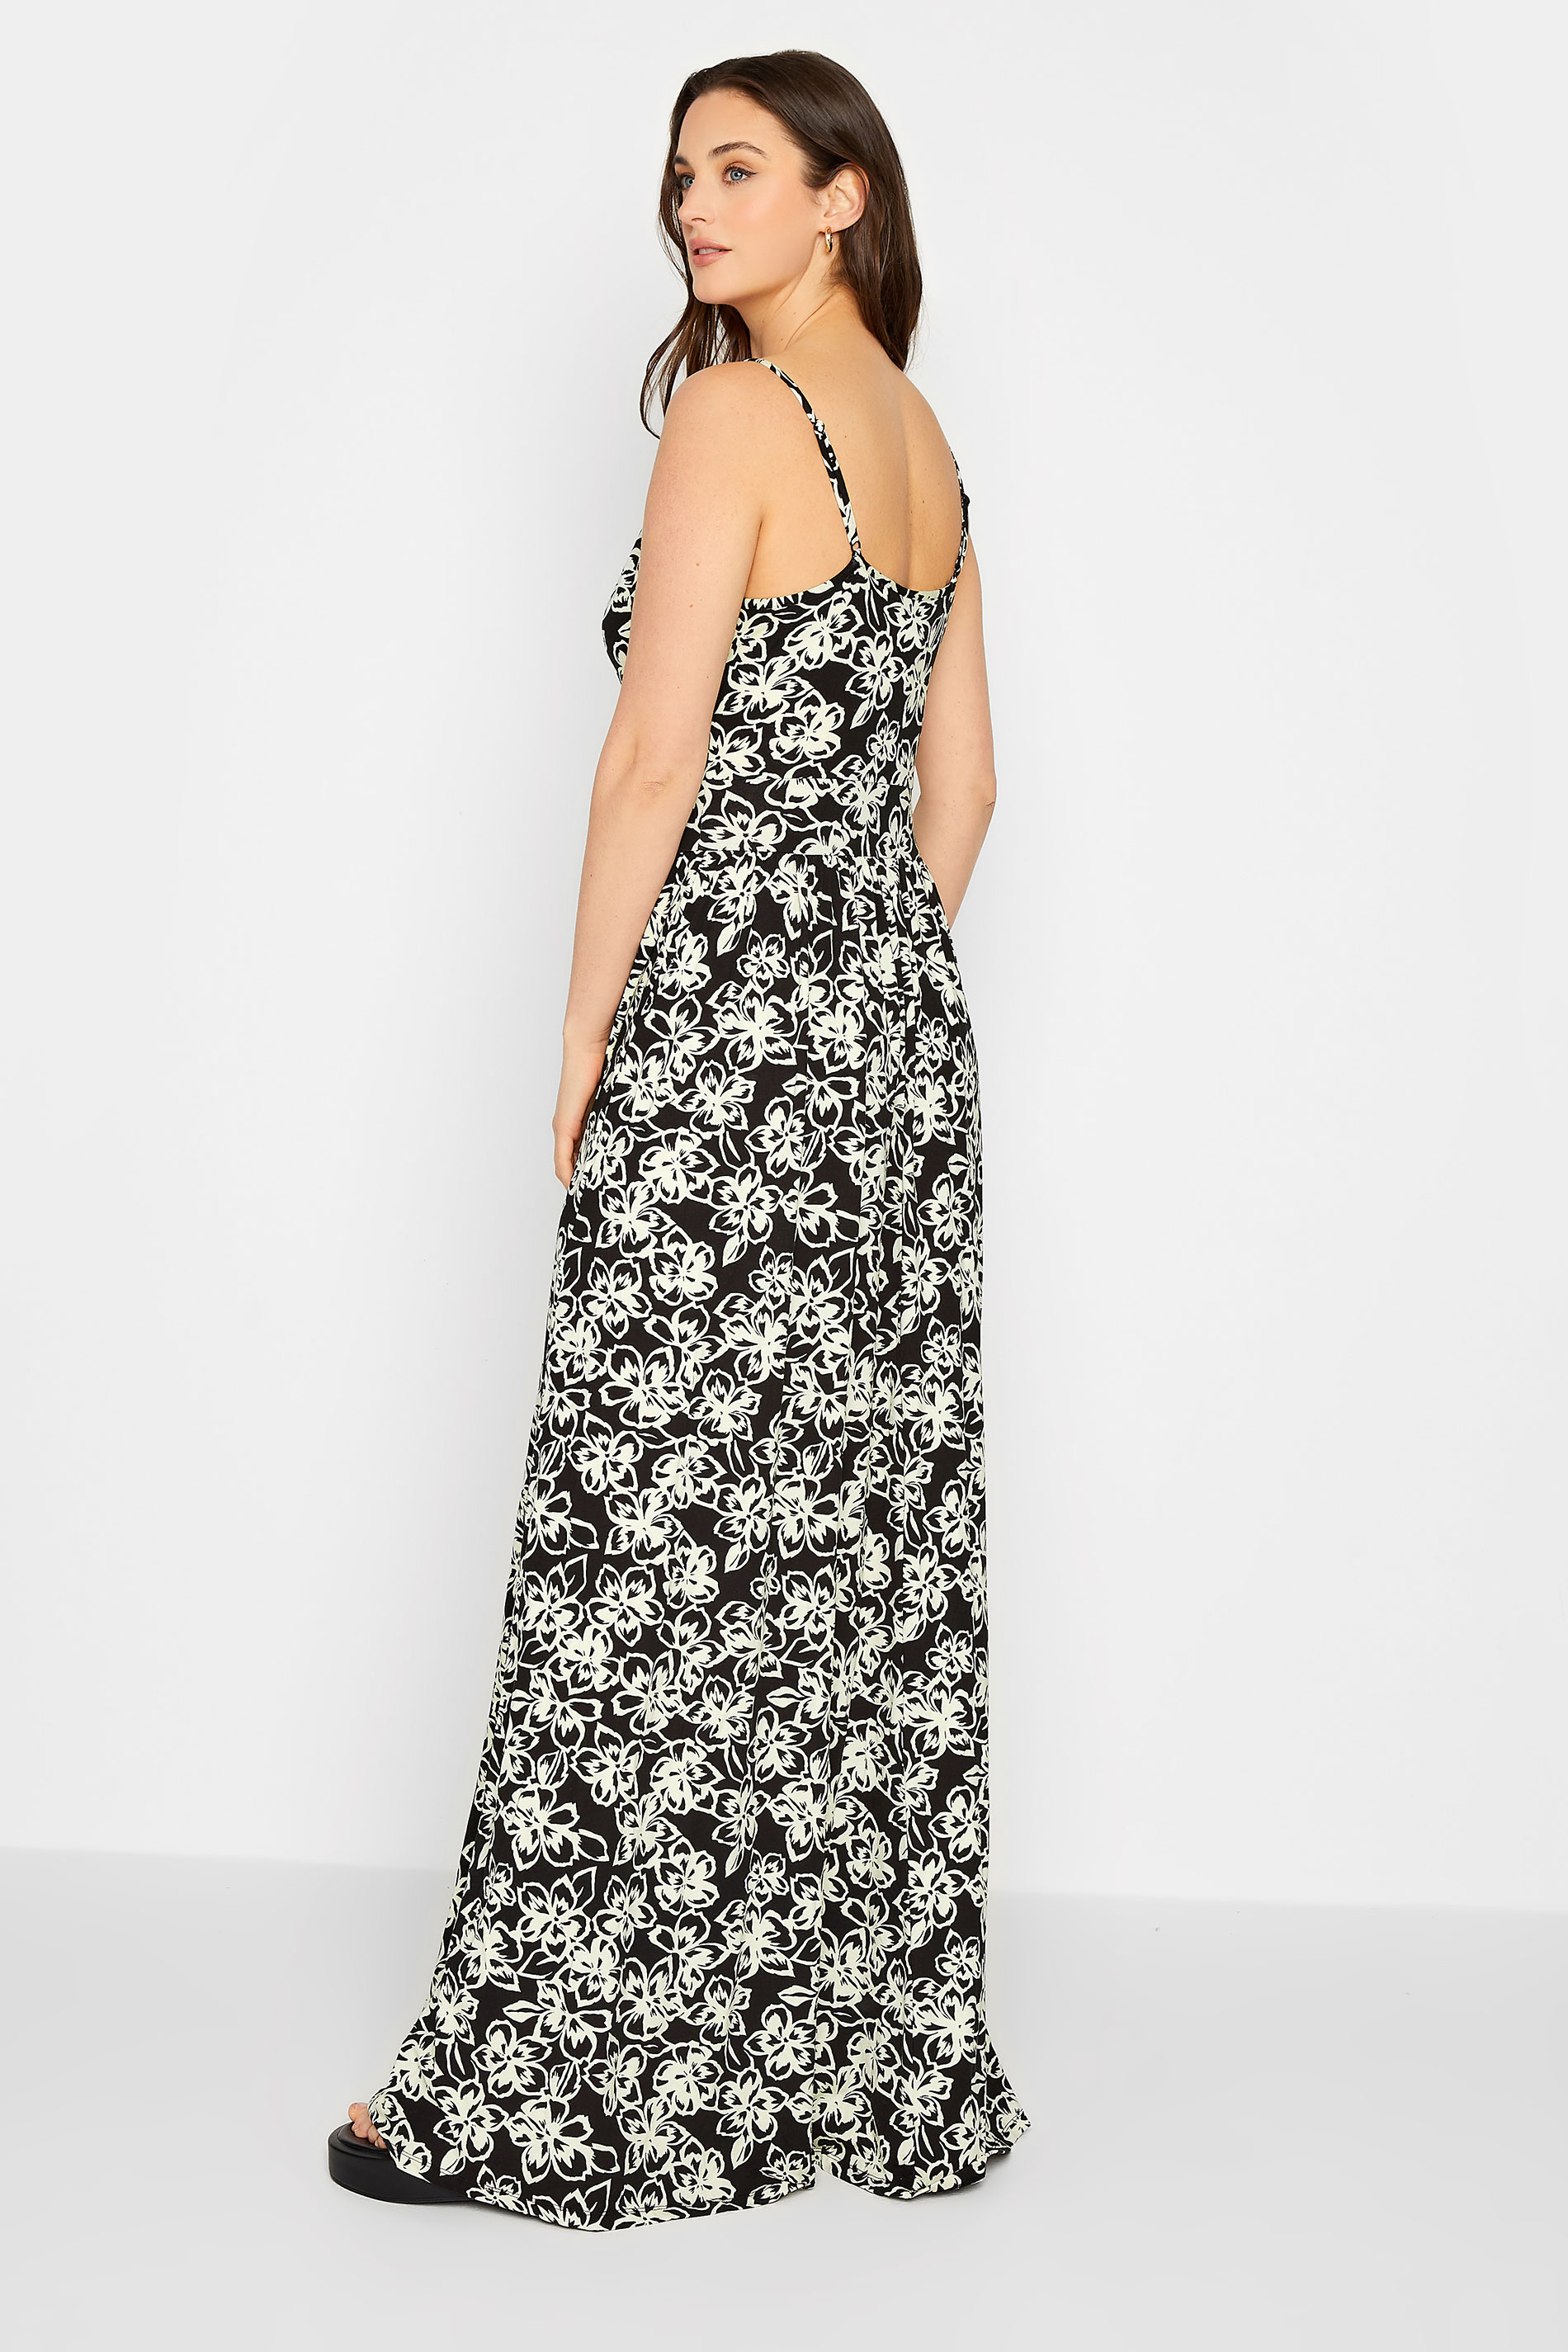 LTS Tall Women's Black Floral Strappy Maxi Dress | Long Tall Sally 3